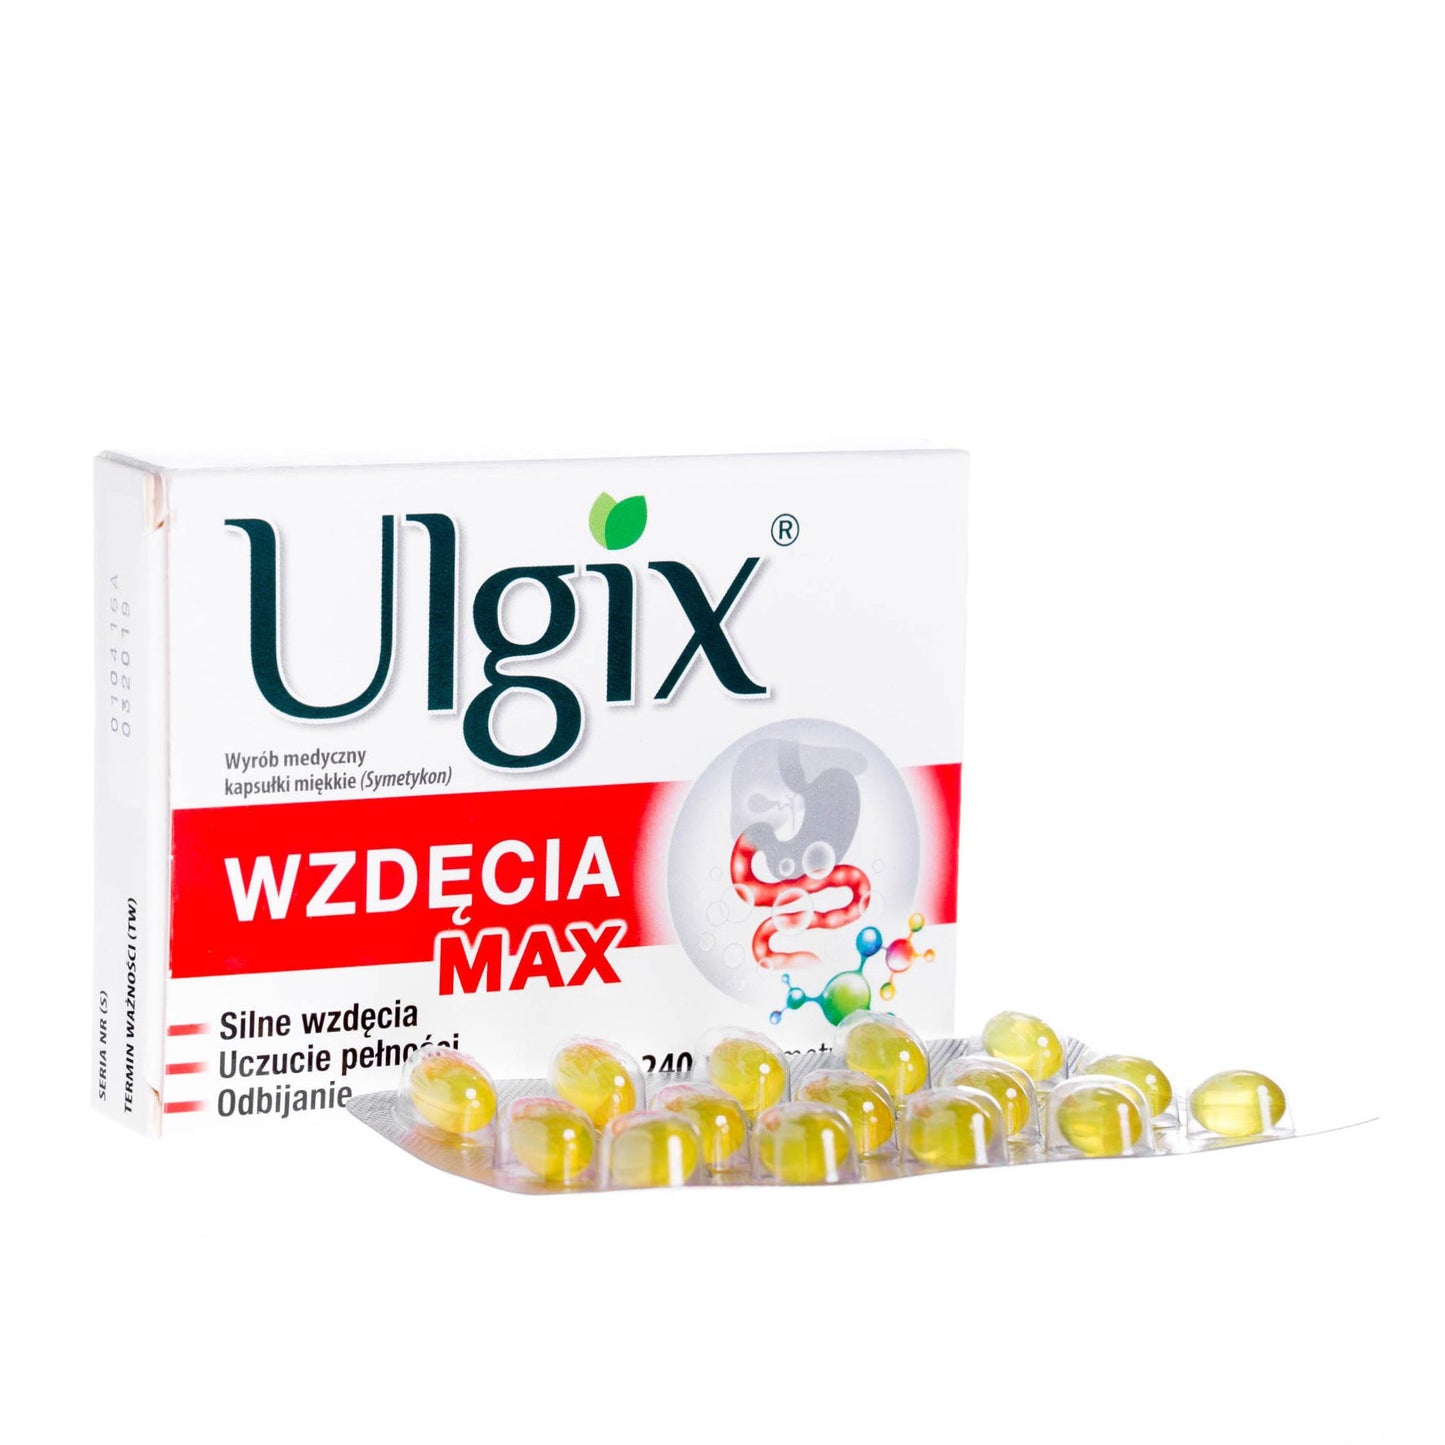 Ulgix Wzdecia MAX Polska Apteka Ziolowa Chicago USA